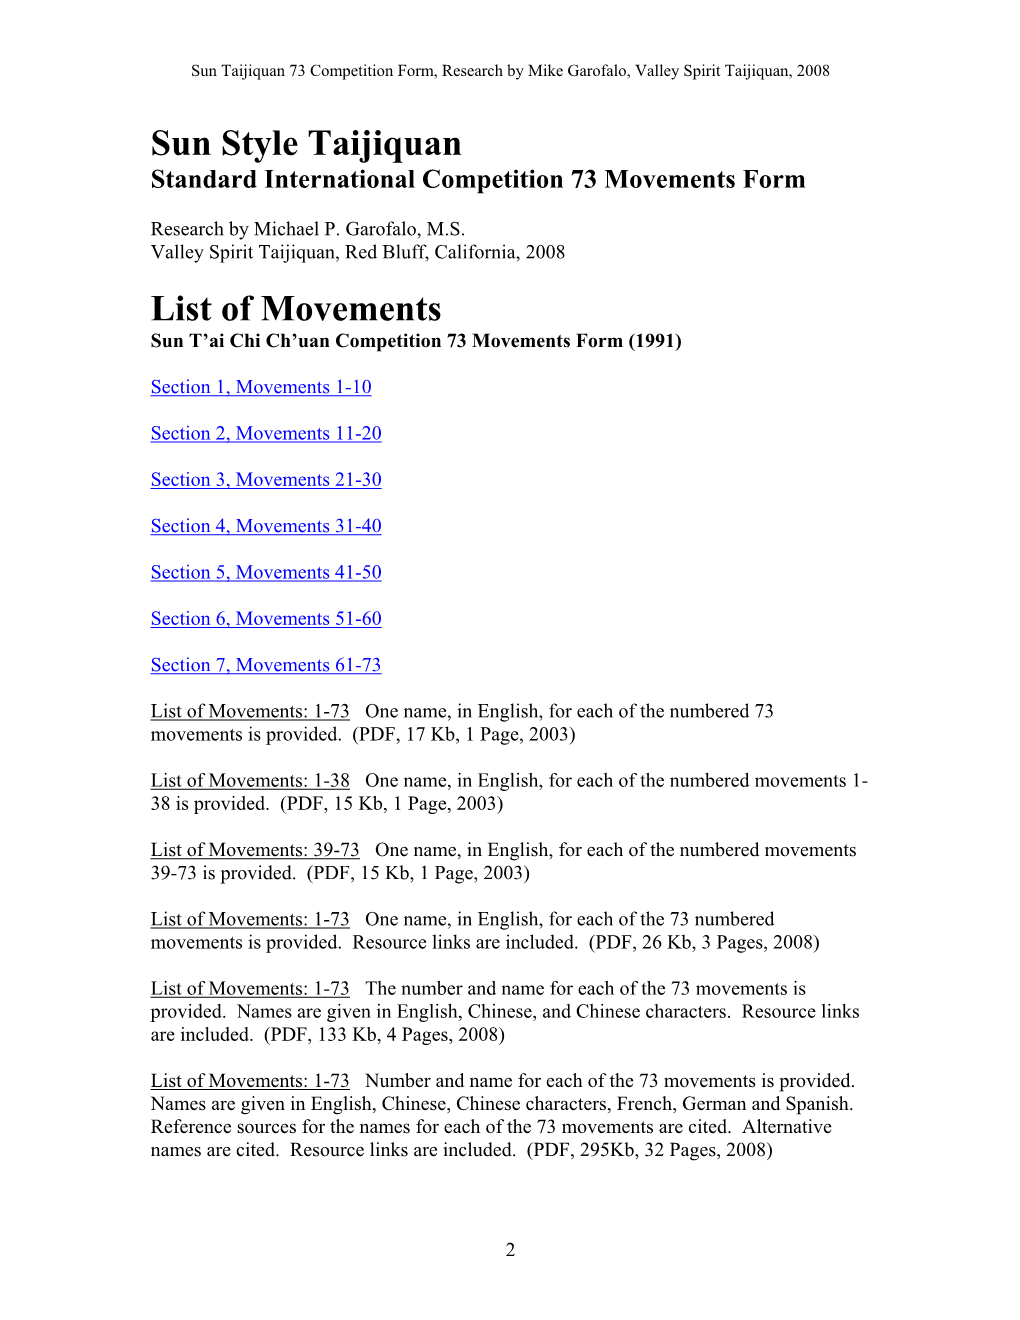 Sun Taijiquan Competition 73 Form, List of Movement Names